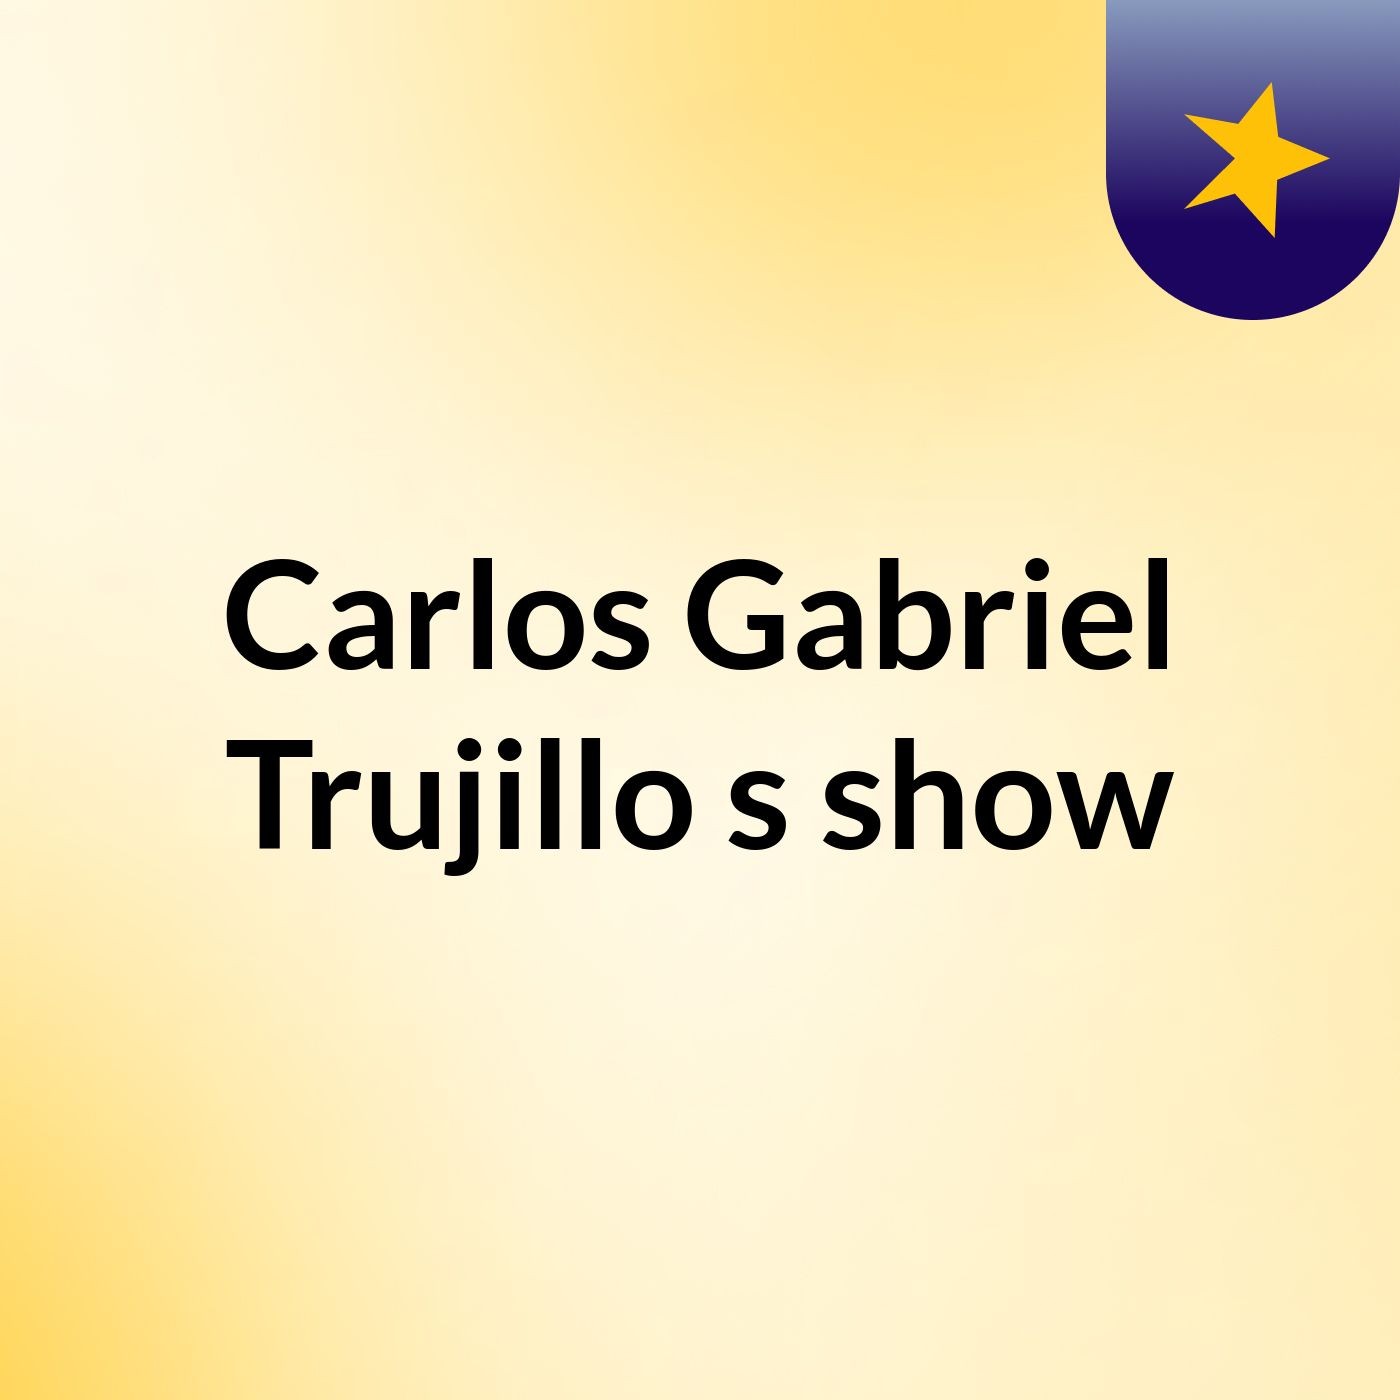 Carlos Gabriel Trujillo's show